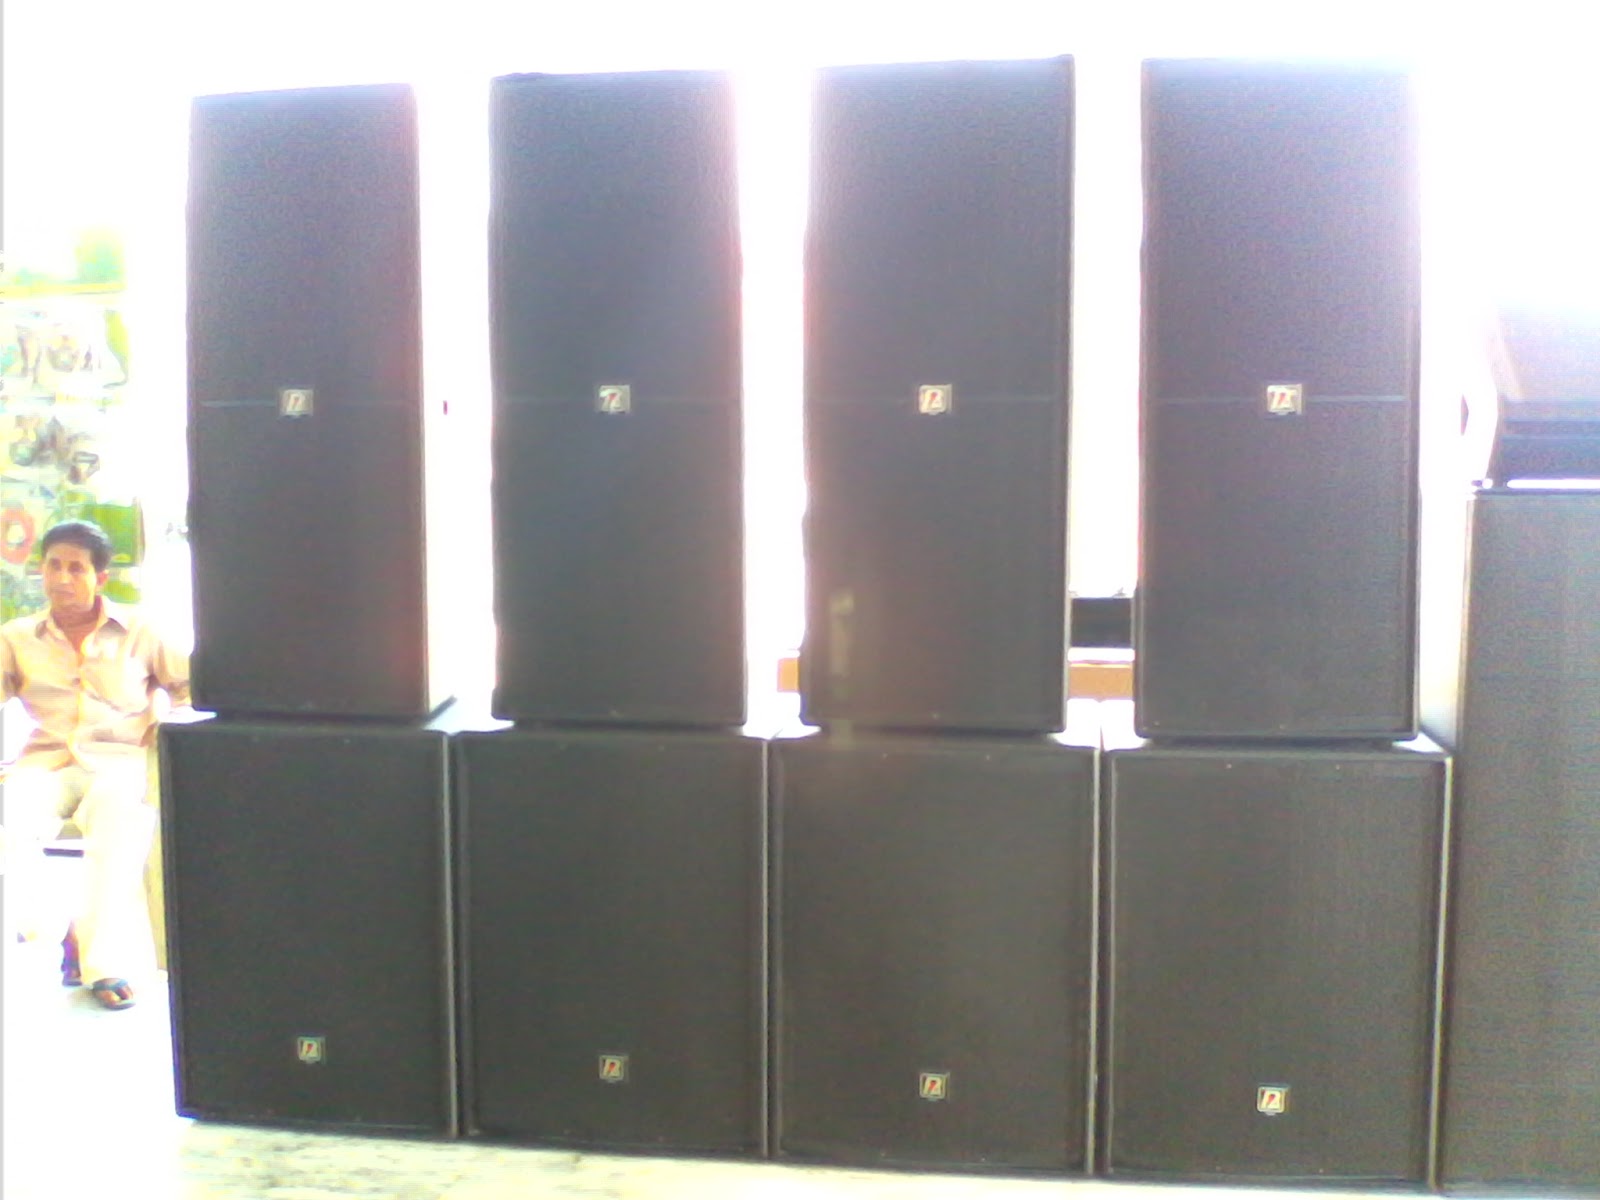 dj bass speakers box wallpaper,furniture,room,audio equipment,metal